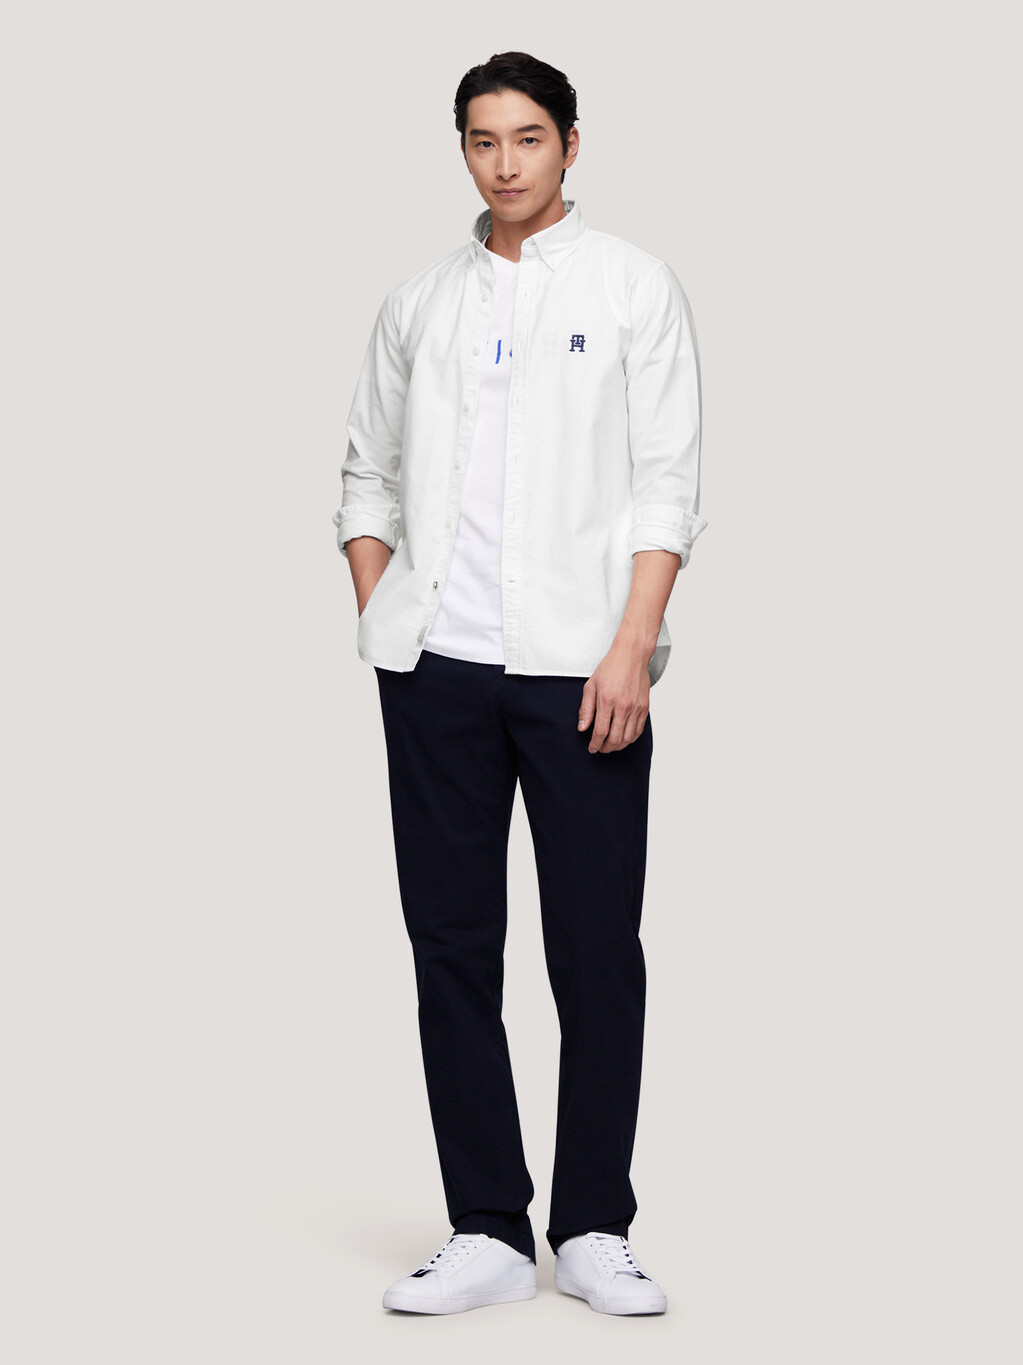 TH Monogram Slim Fit Shirt, Optic White, hi-res